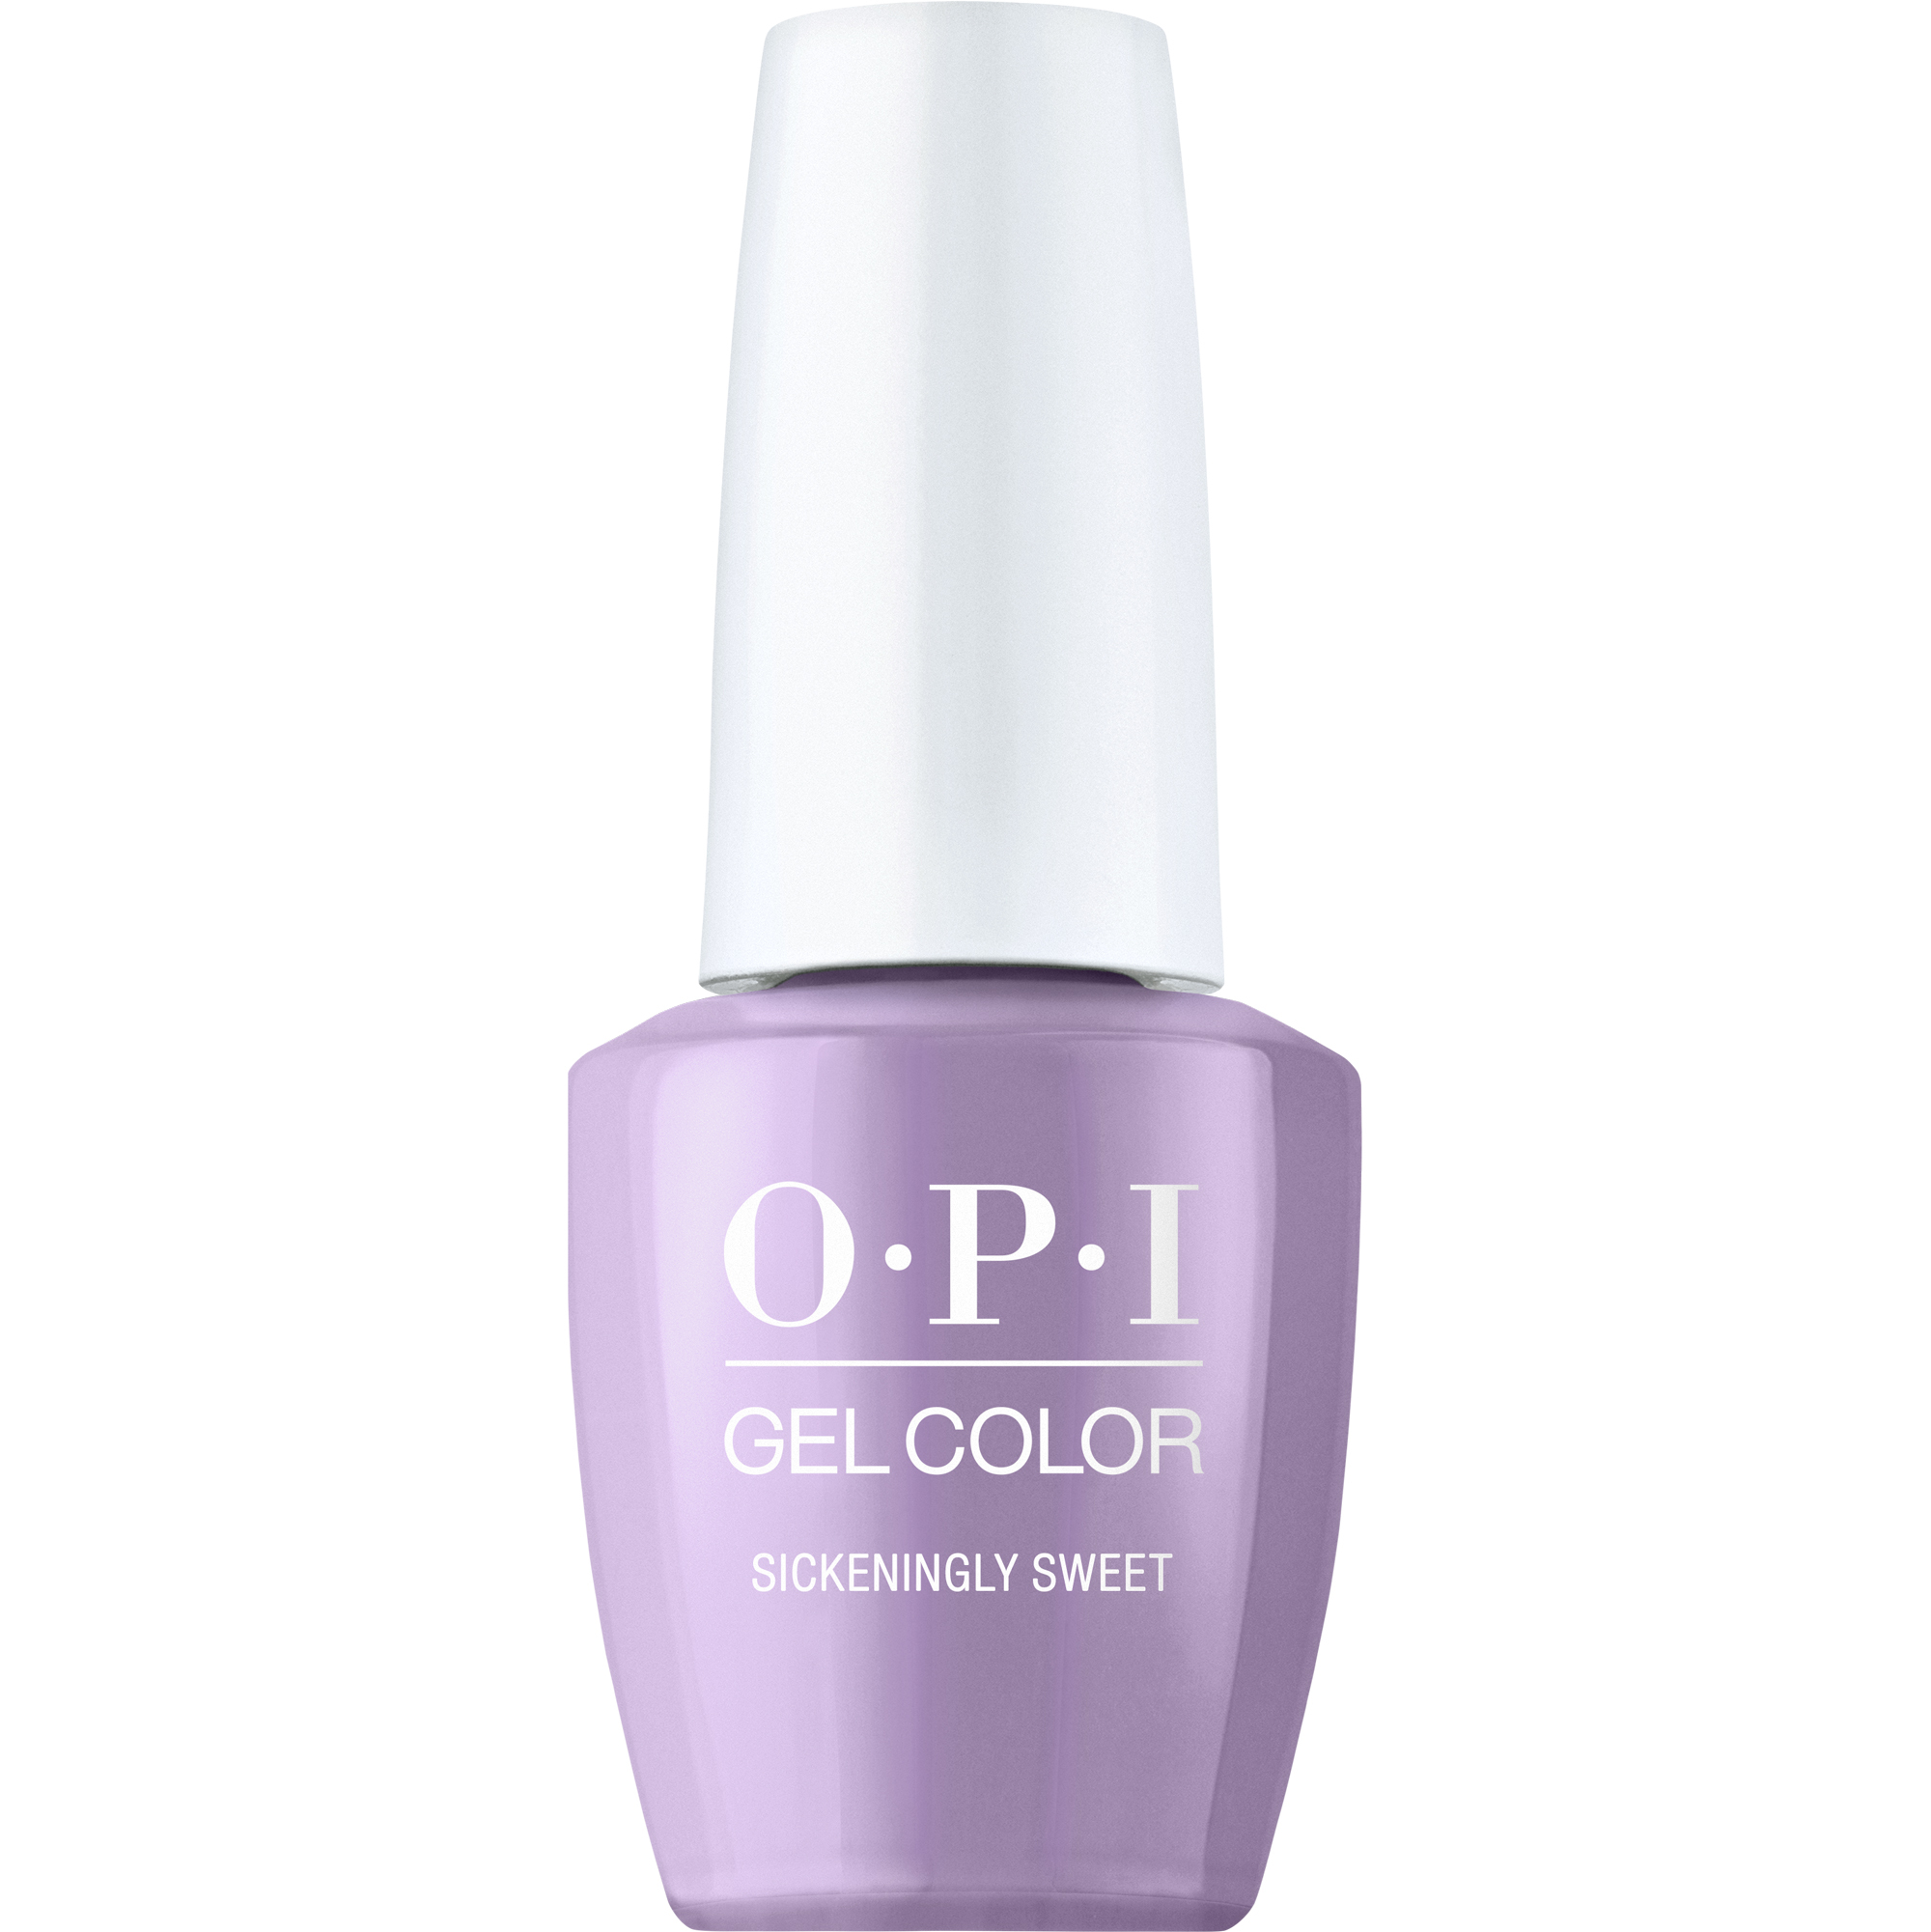 OPI Gel Color 360 - Sickeningly Sweet